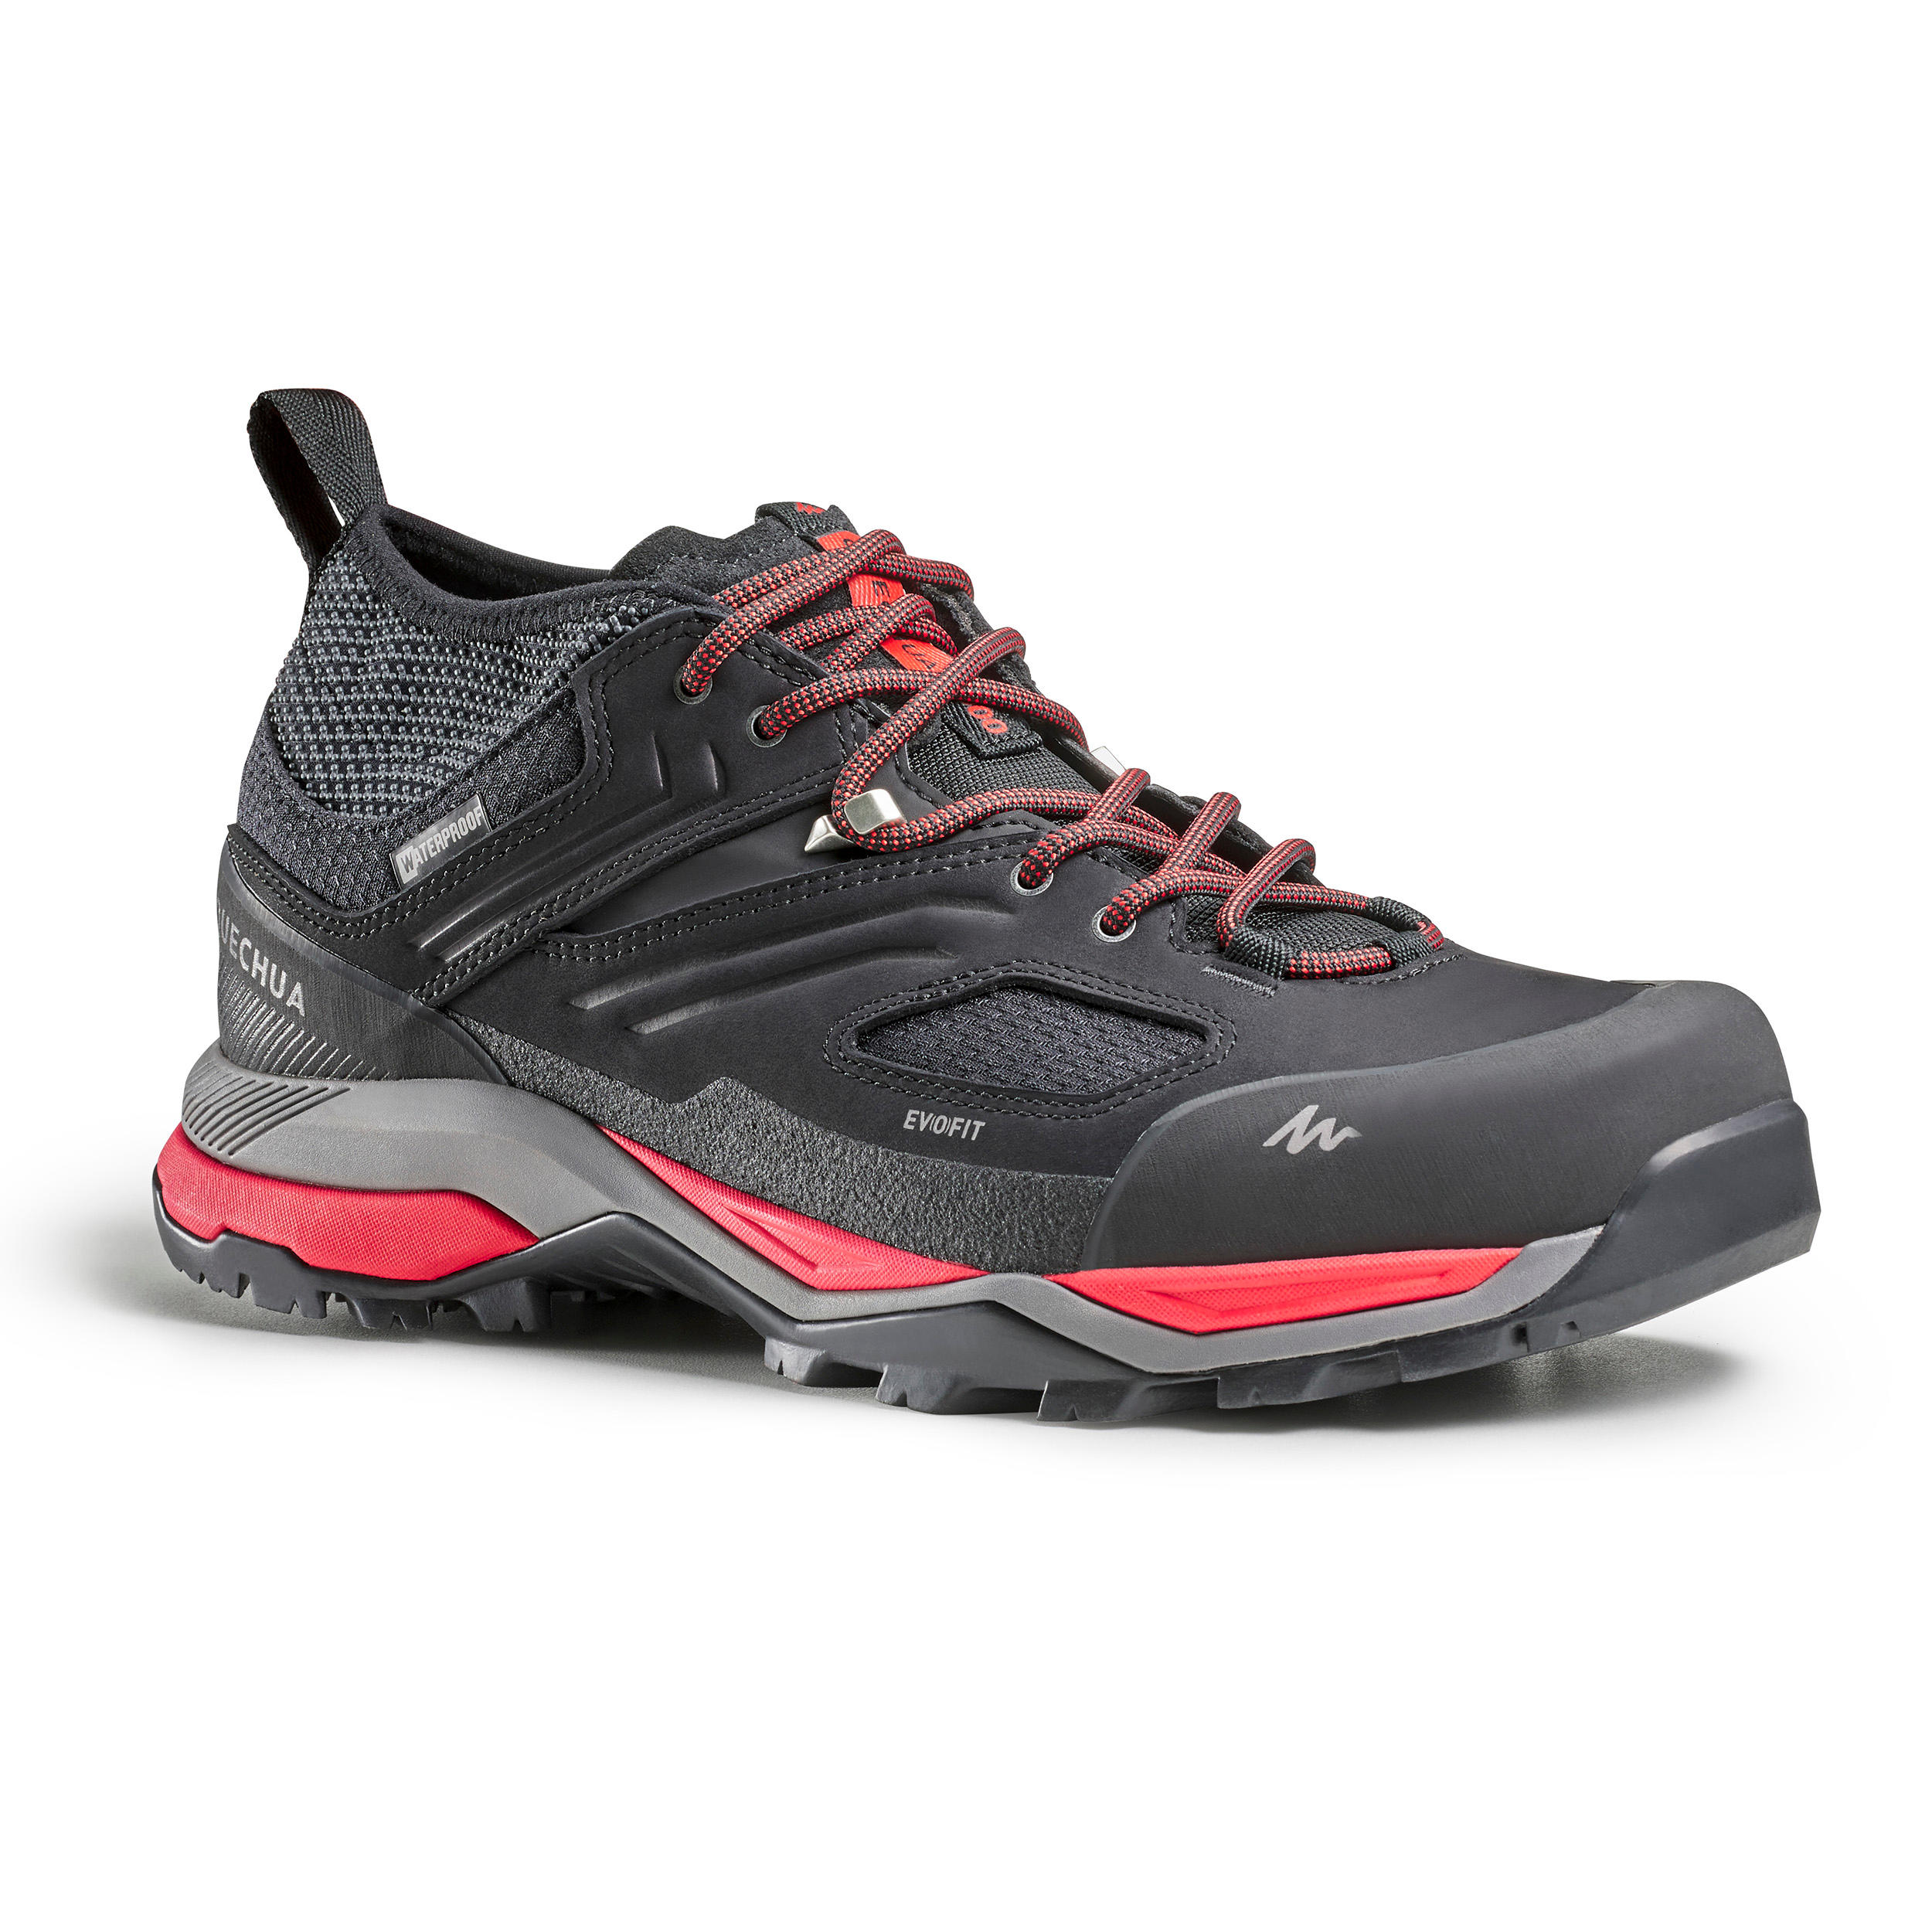 QUECHUA Men's waterproof mountain hiking shoes - MH900 - Black/Red